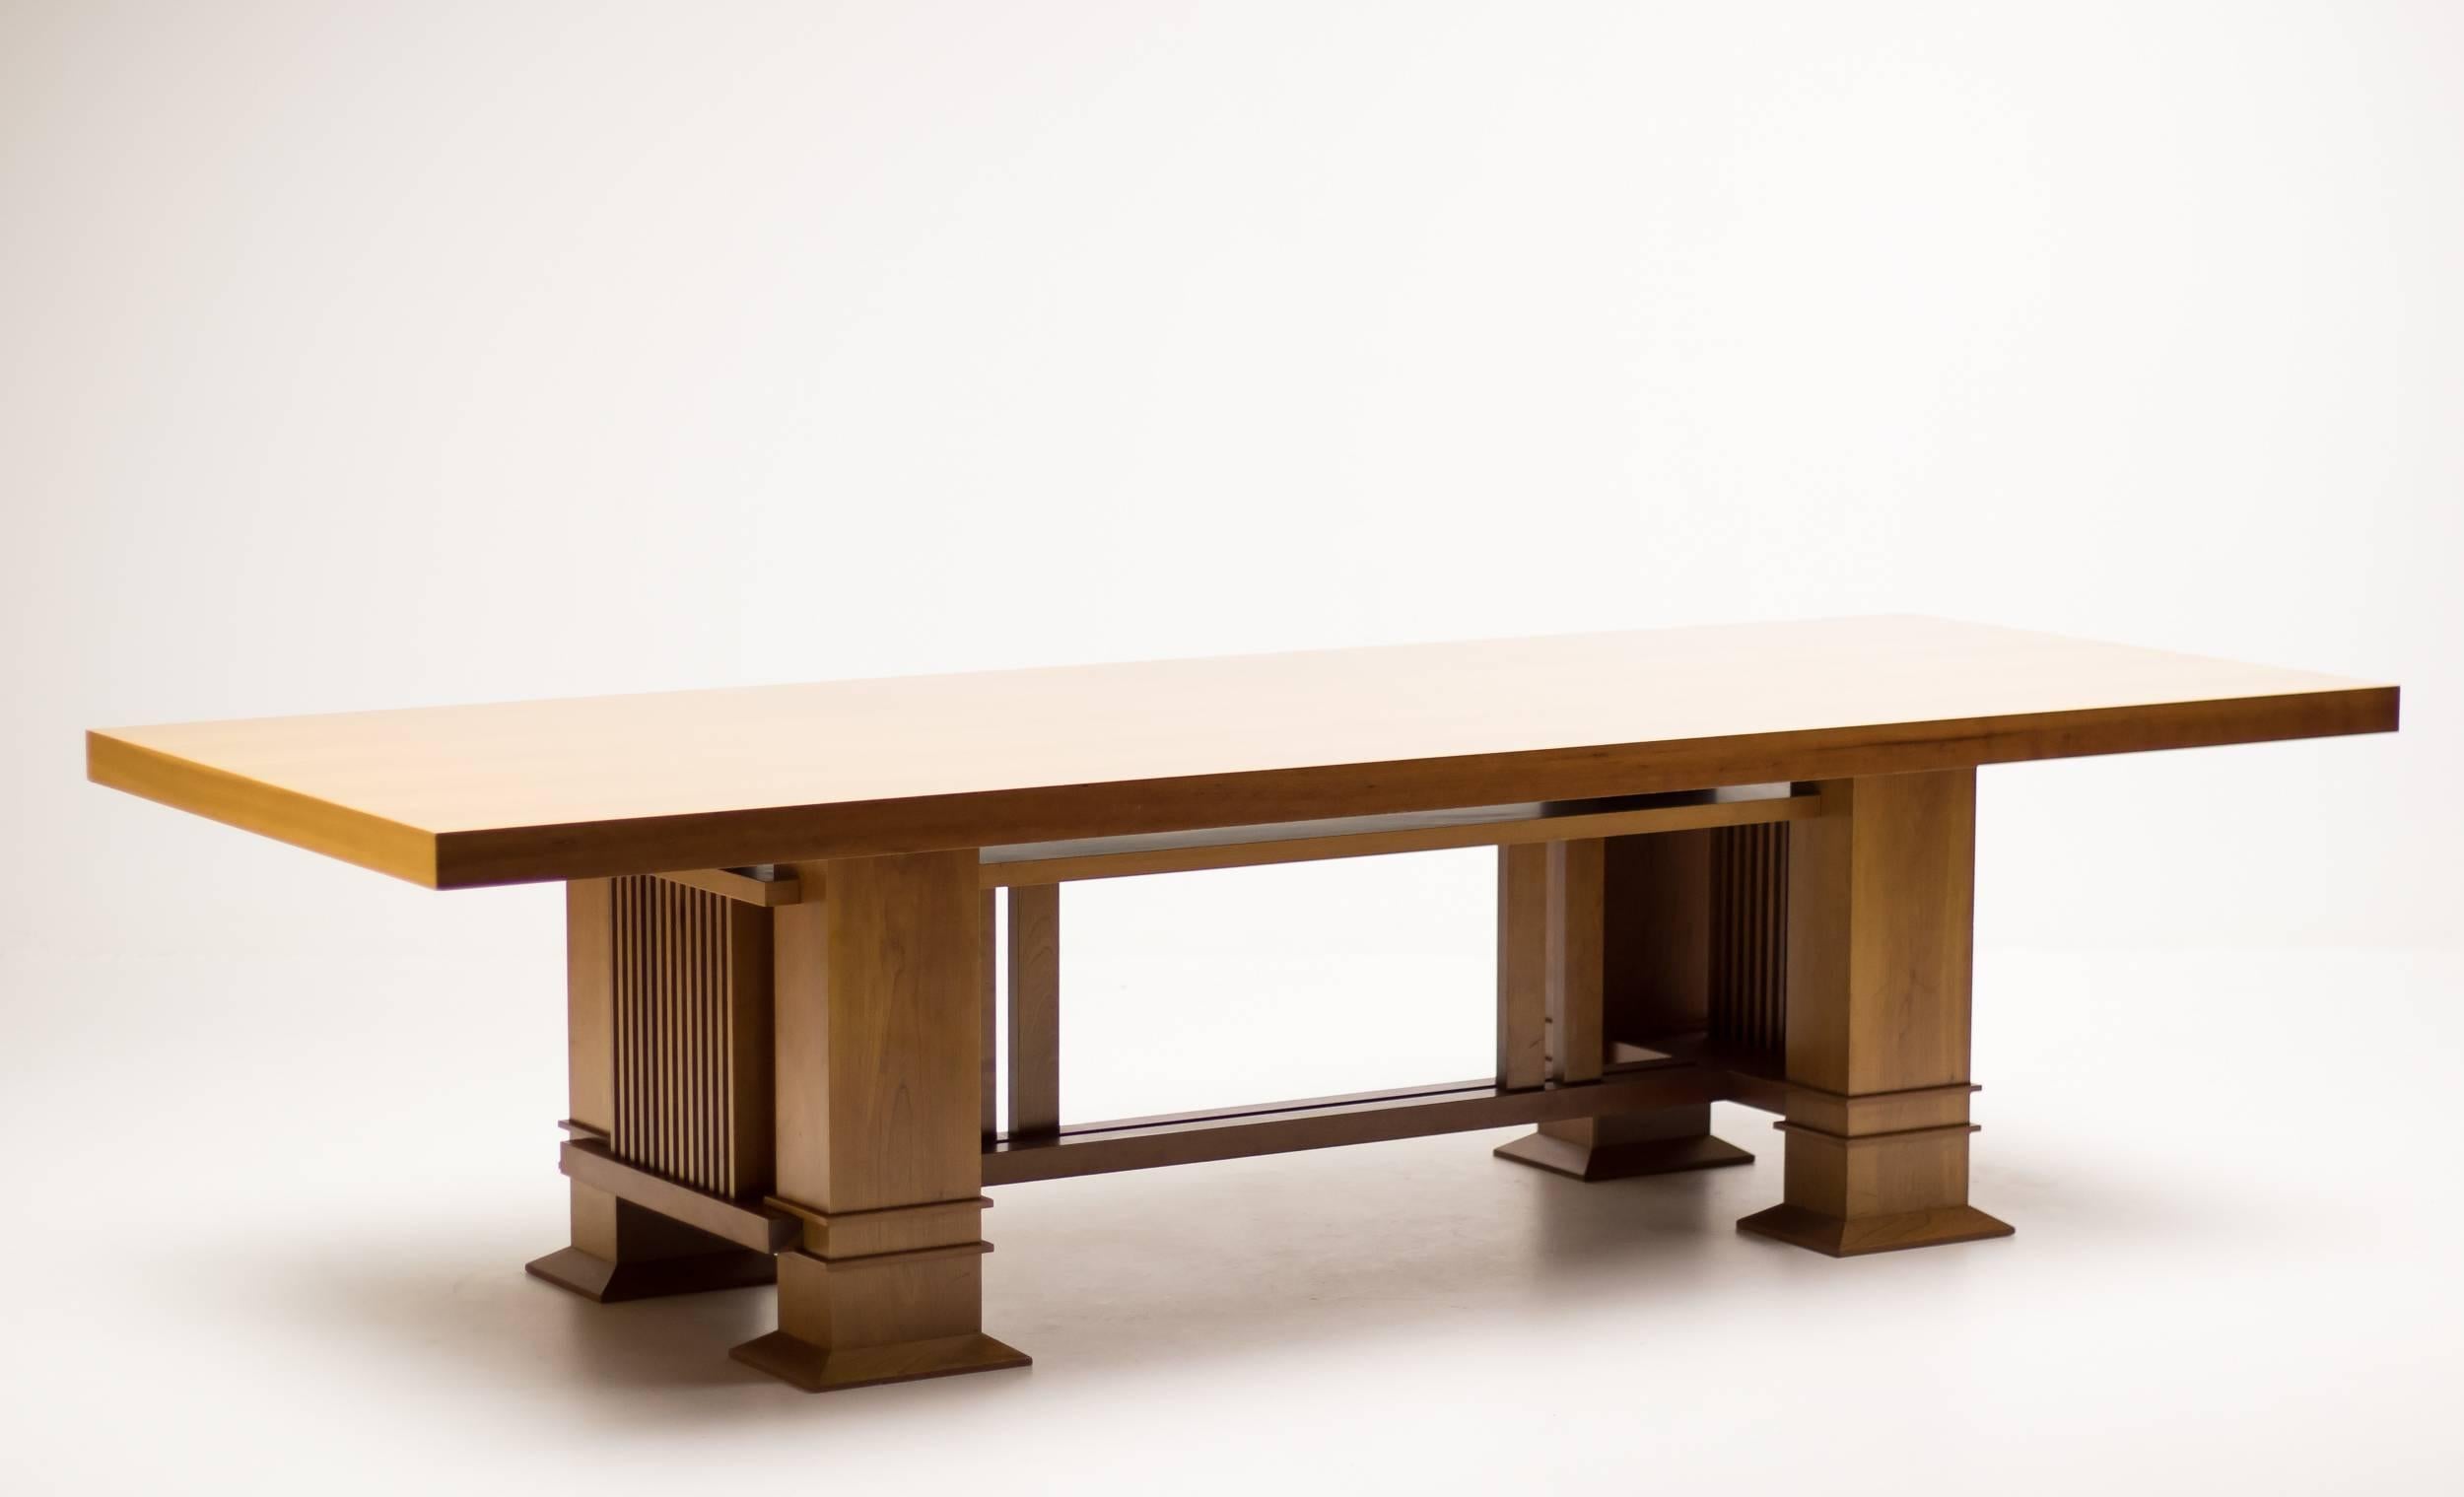 20th Century Monumental Frank Lloyd Wright 605 Allen Table by Cassina